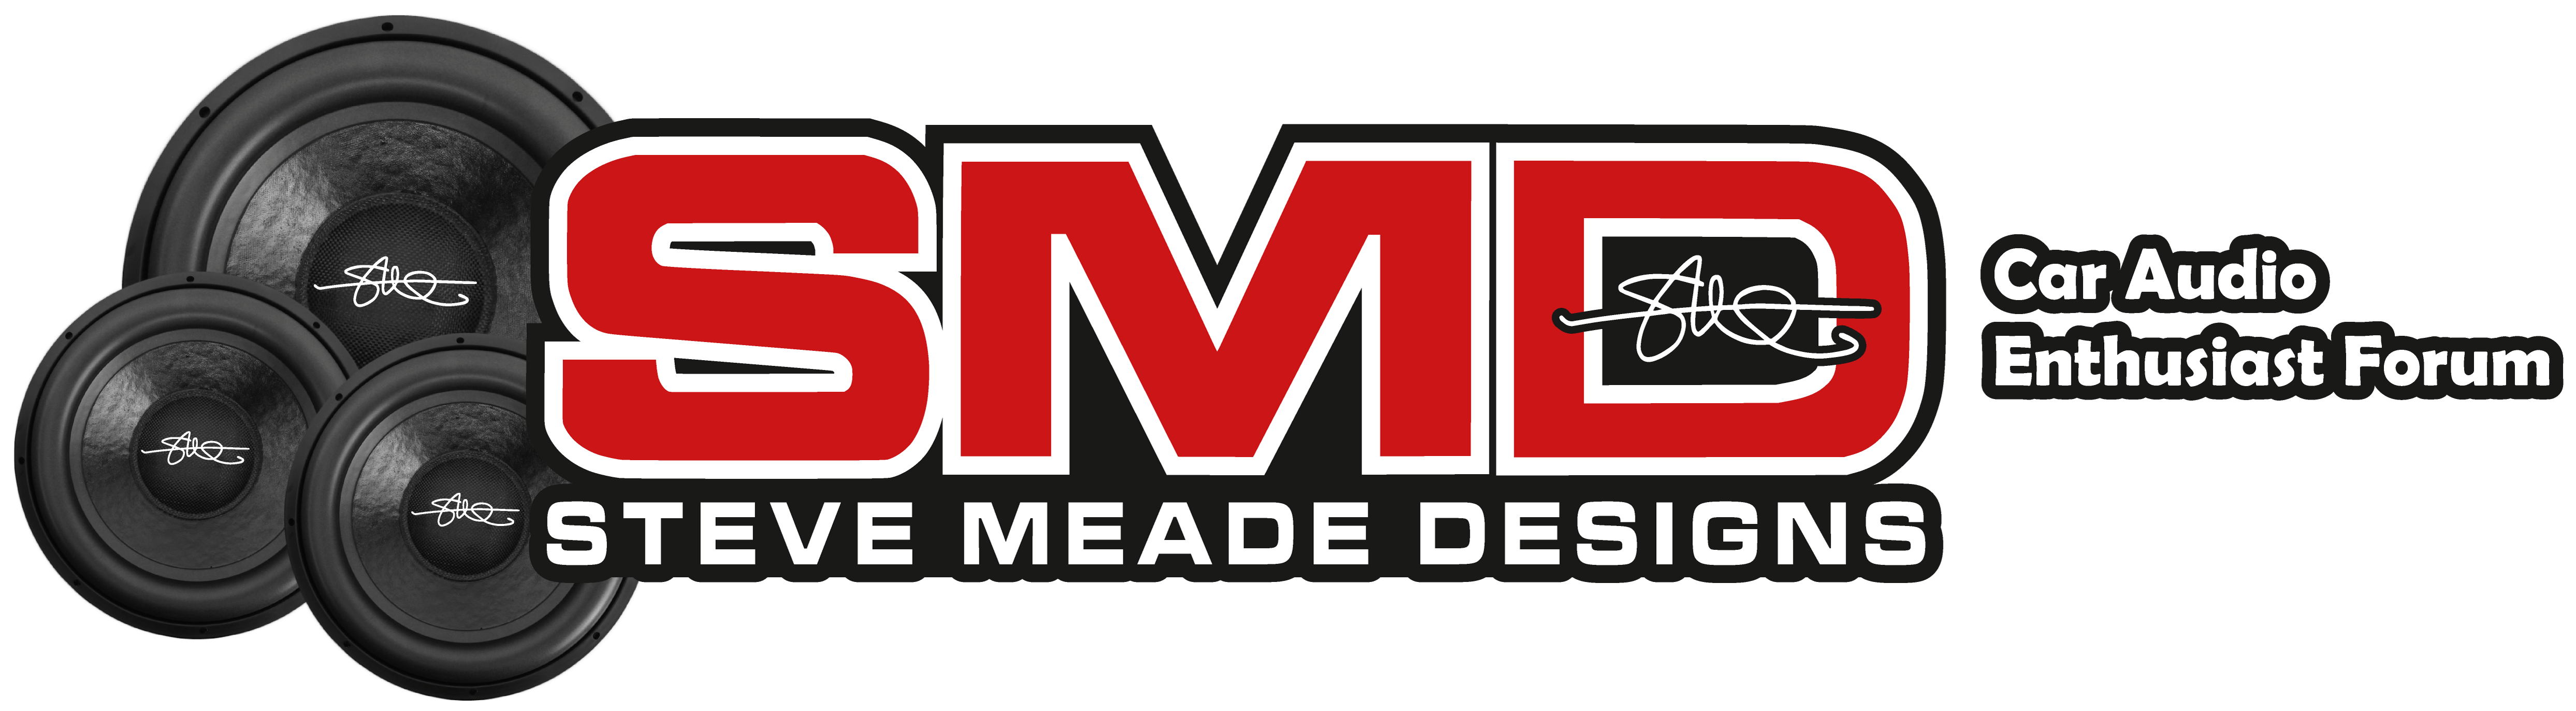 Steve Meade Designs